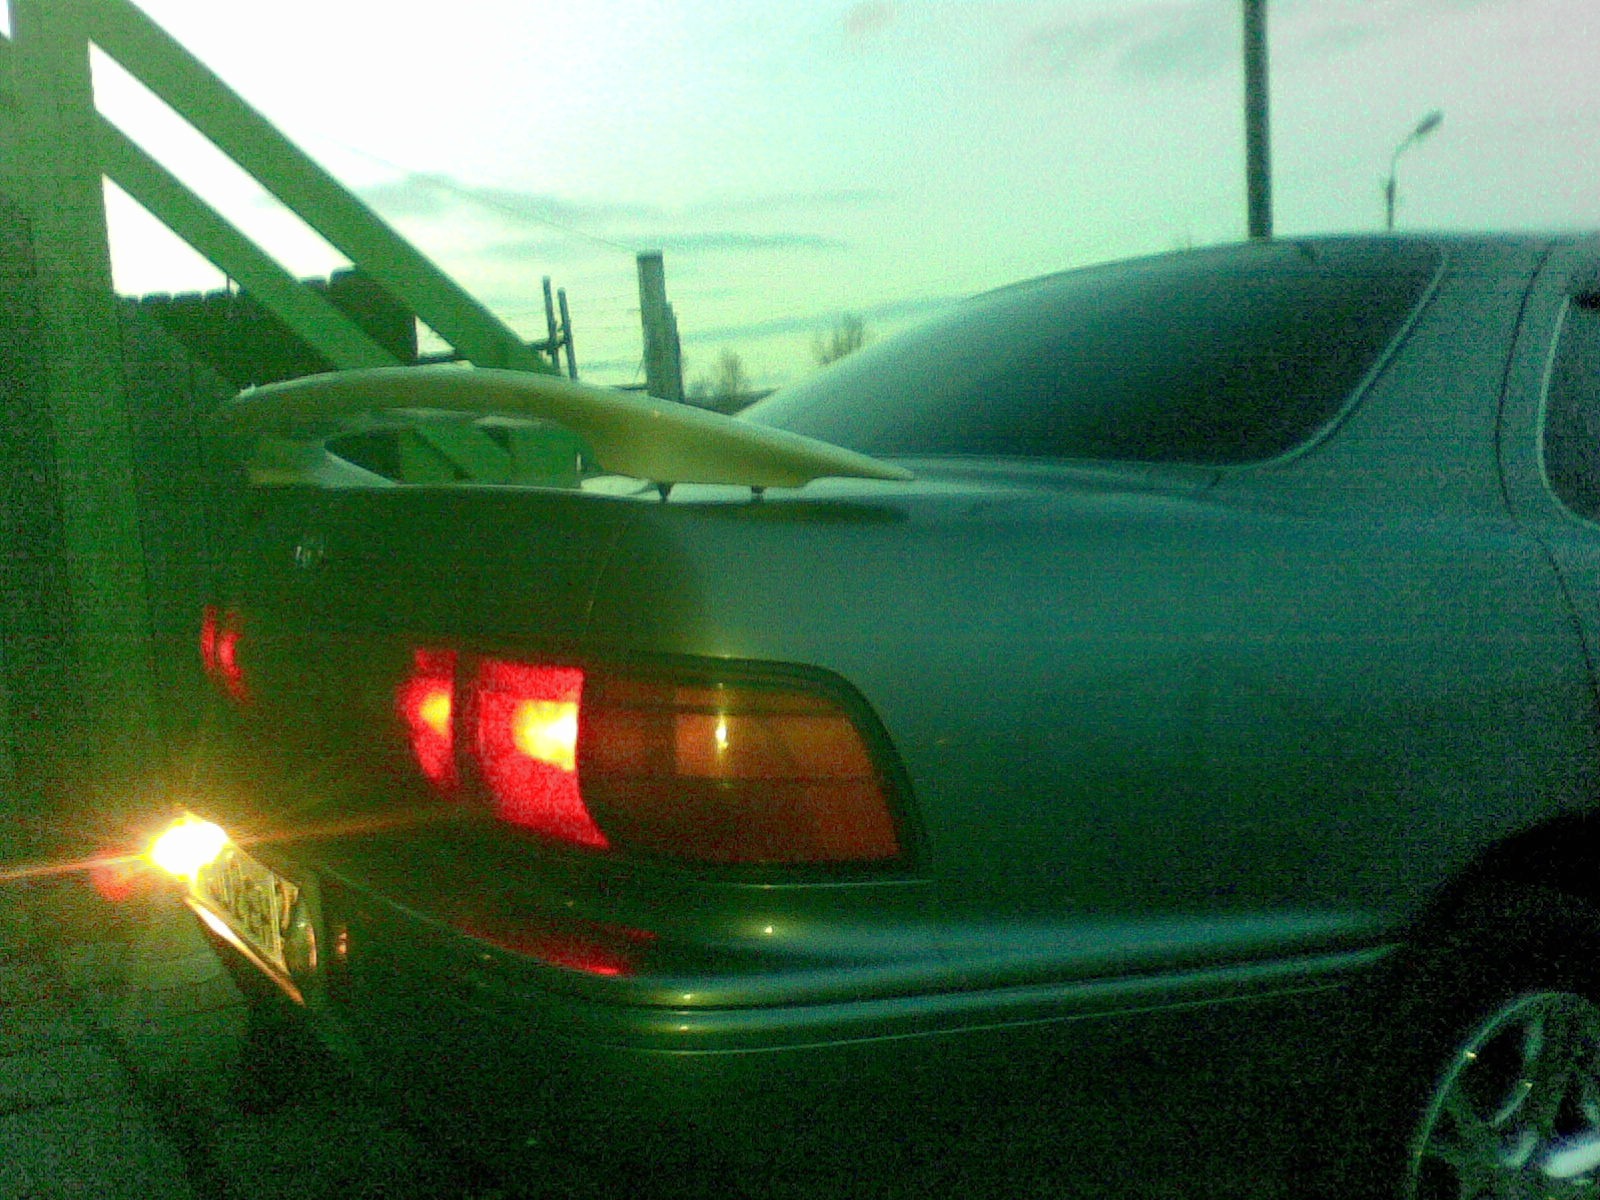   Integra 2004 Toyota Camry 18 1991